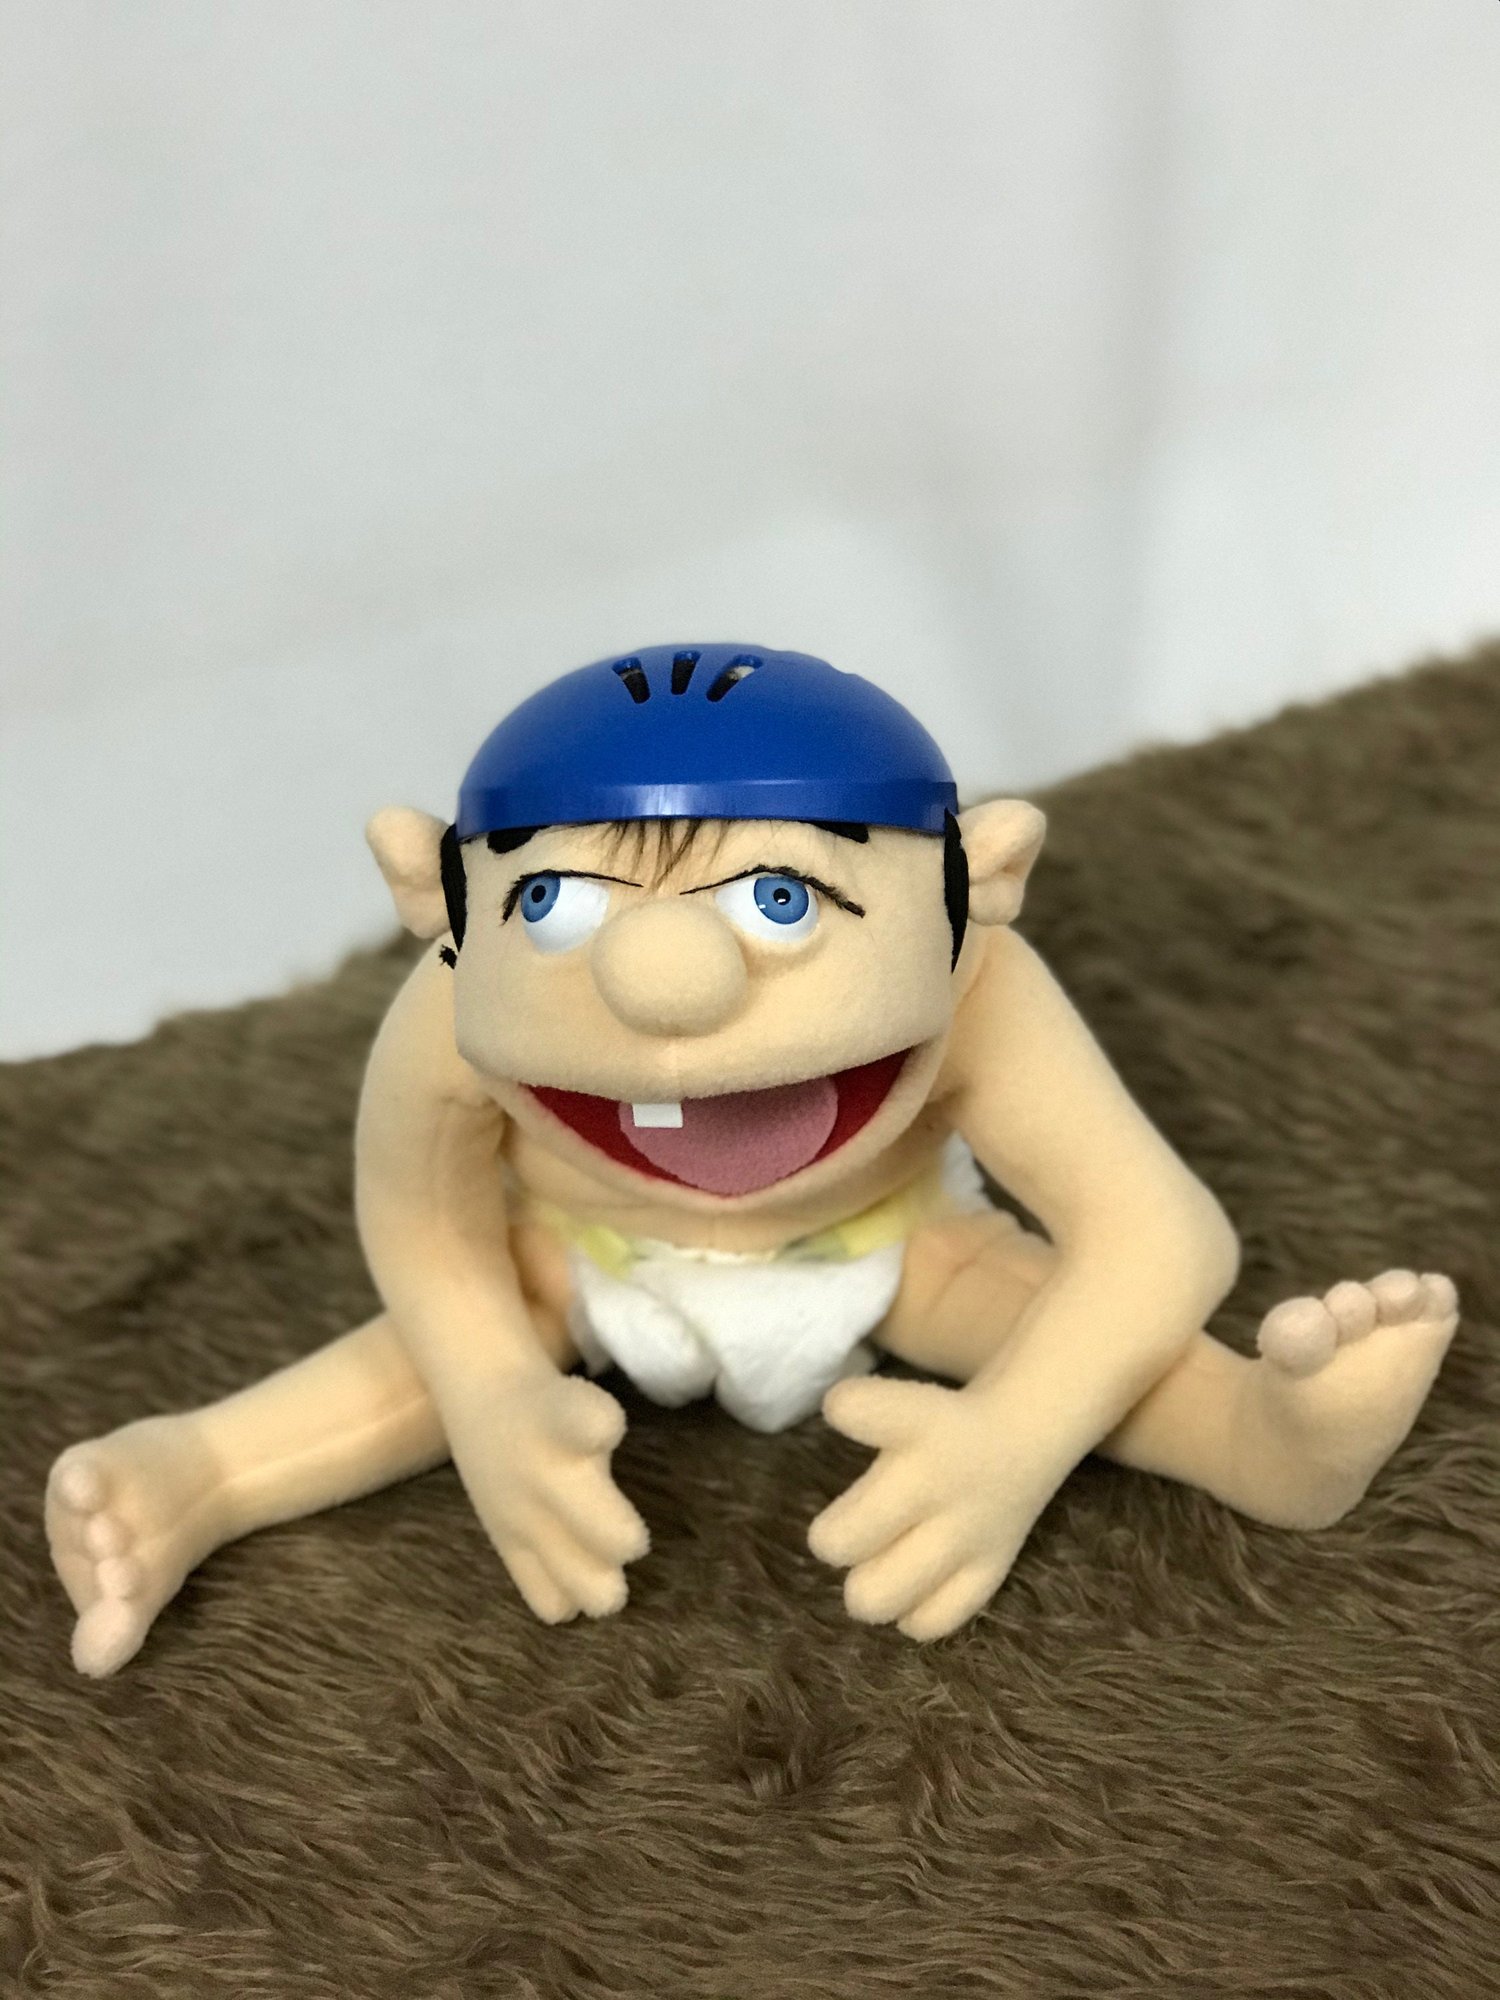 The Baby Jeffy puppet Custom Puppets